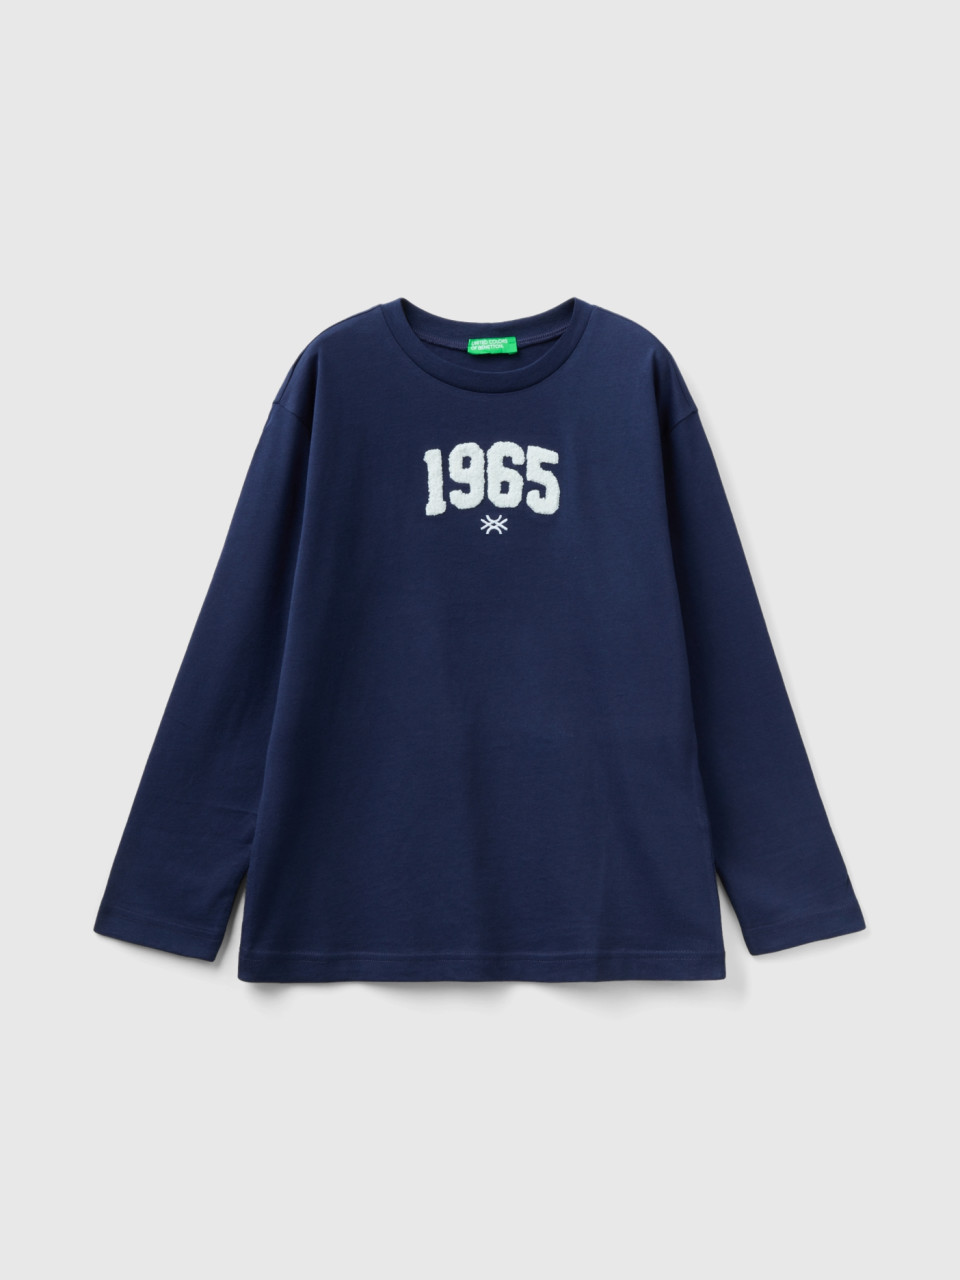 Benetton, Warm 100% Organic Cotton T-shirt, Dark Blue, Kids